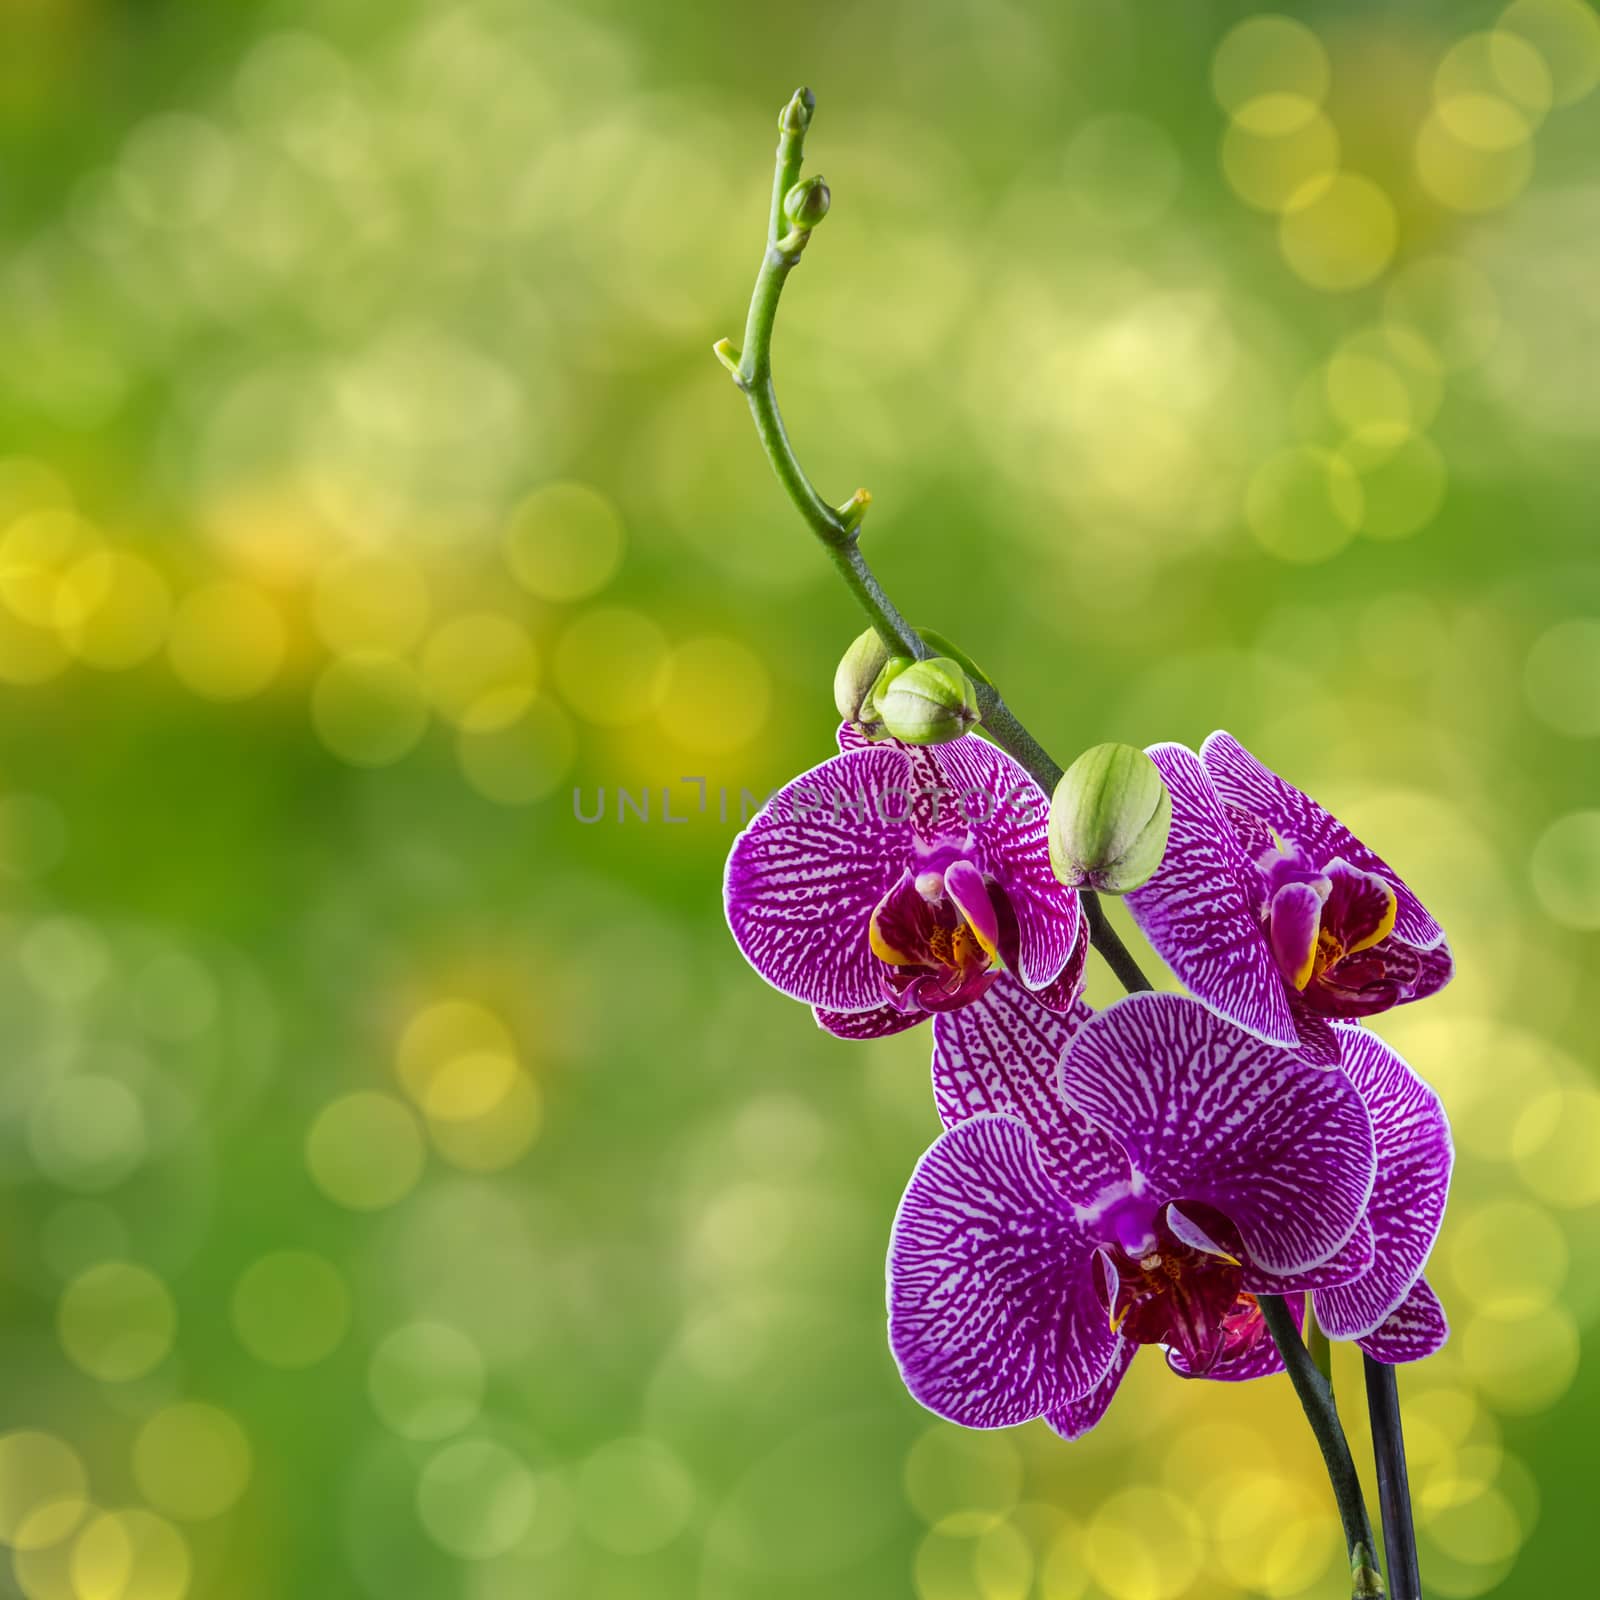 purple orchid flower on blur background by Pellinni